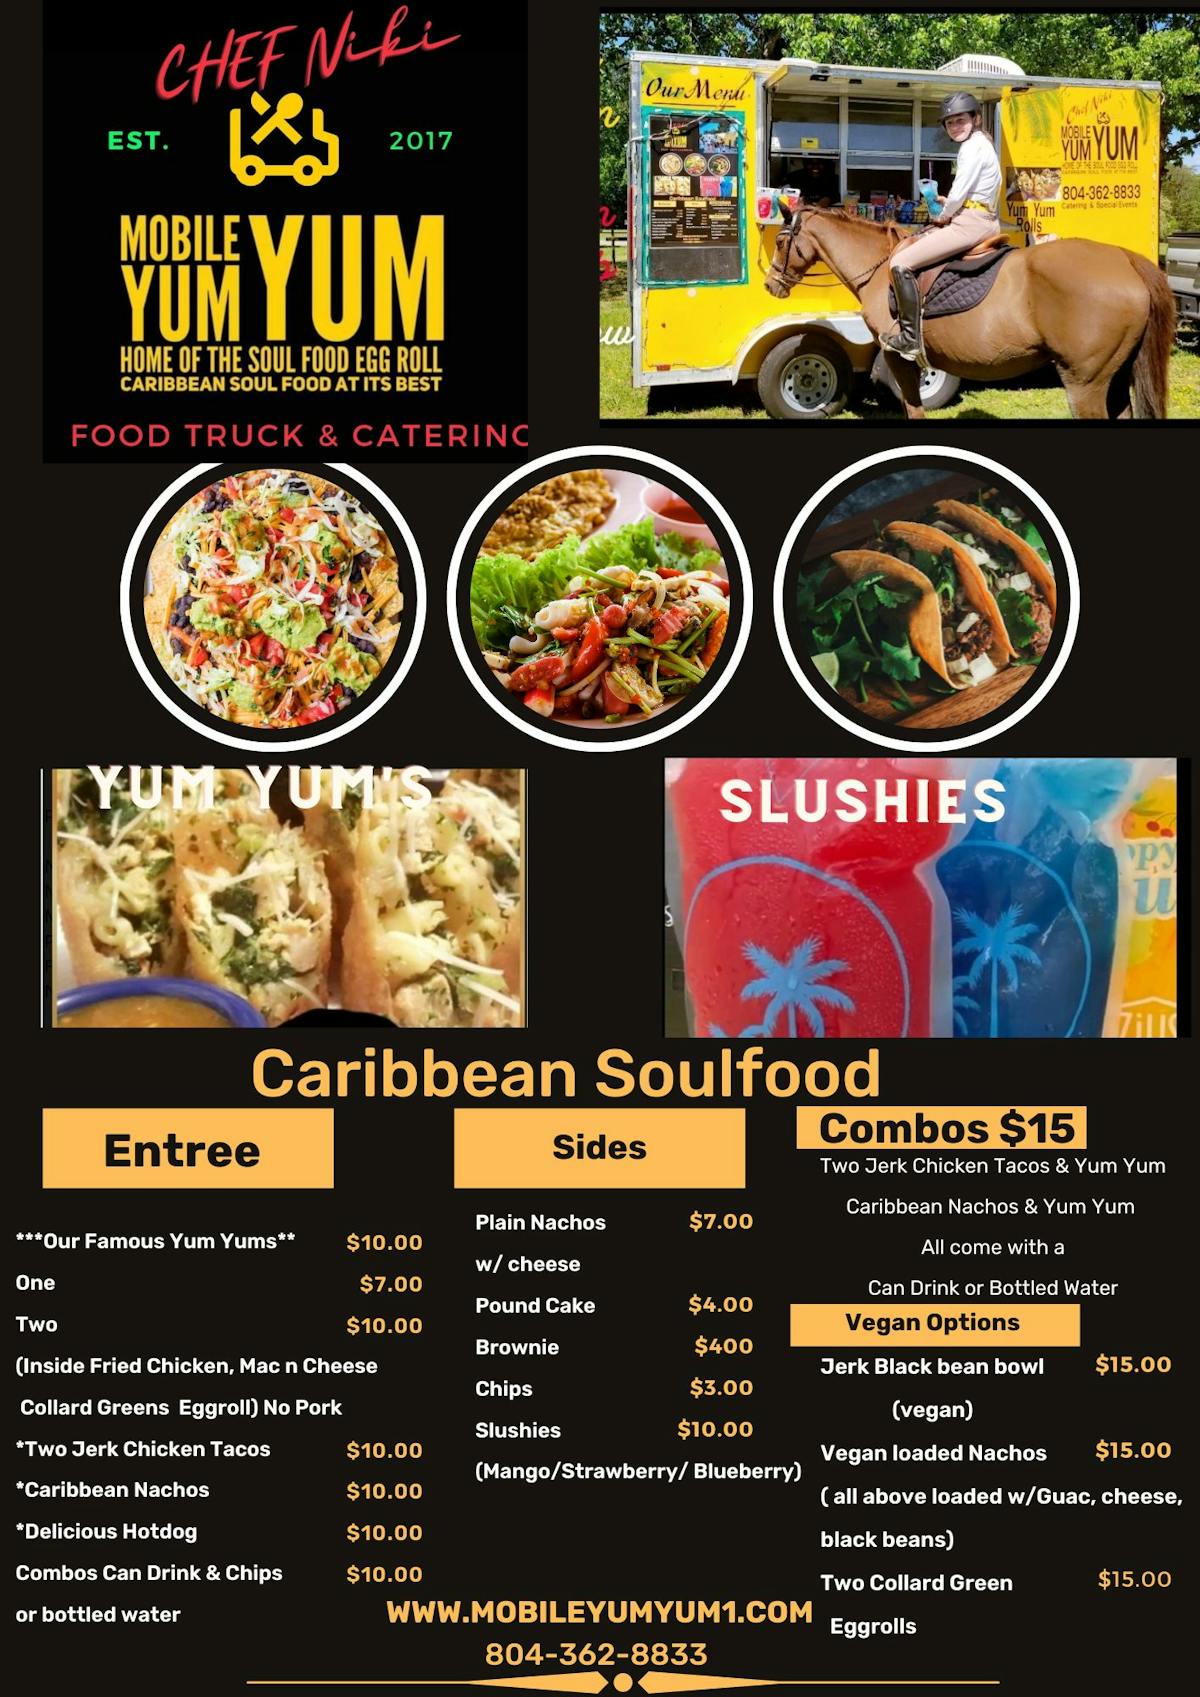 Food Truck Menu, graphical user interface, website